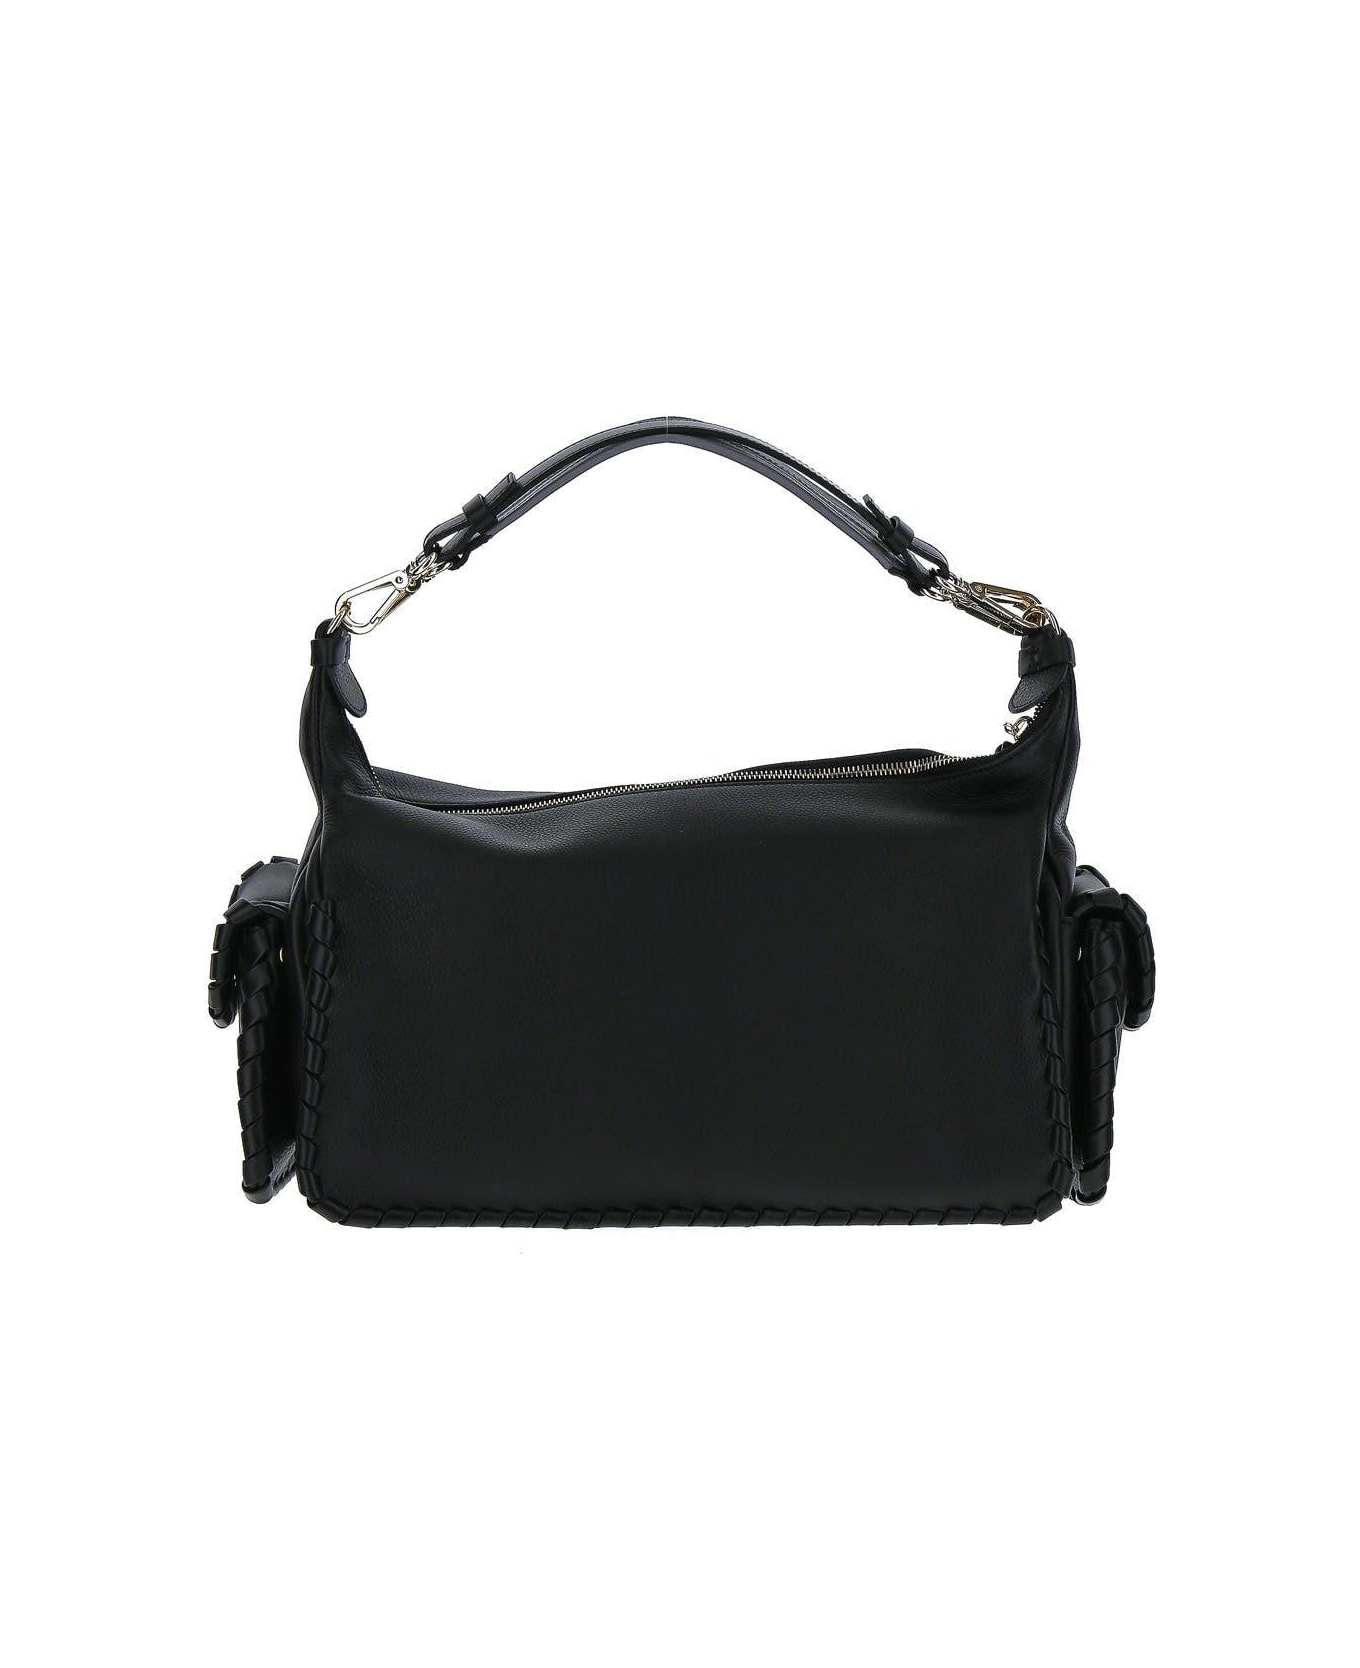 Chloé Black Leather Bag - Black